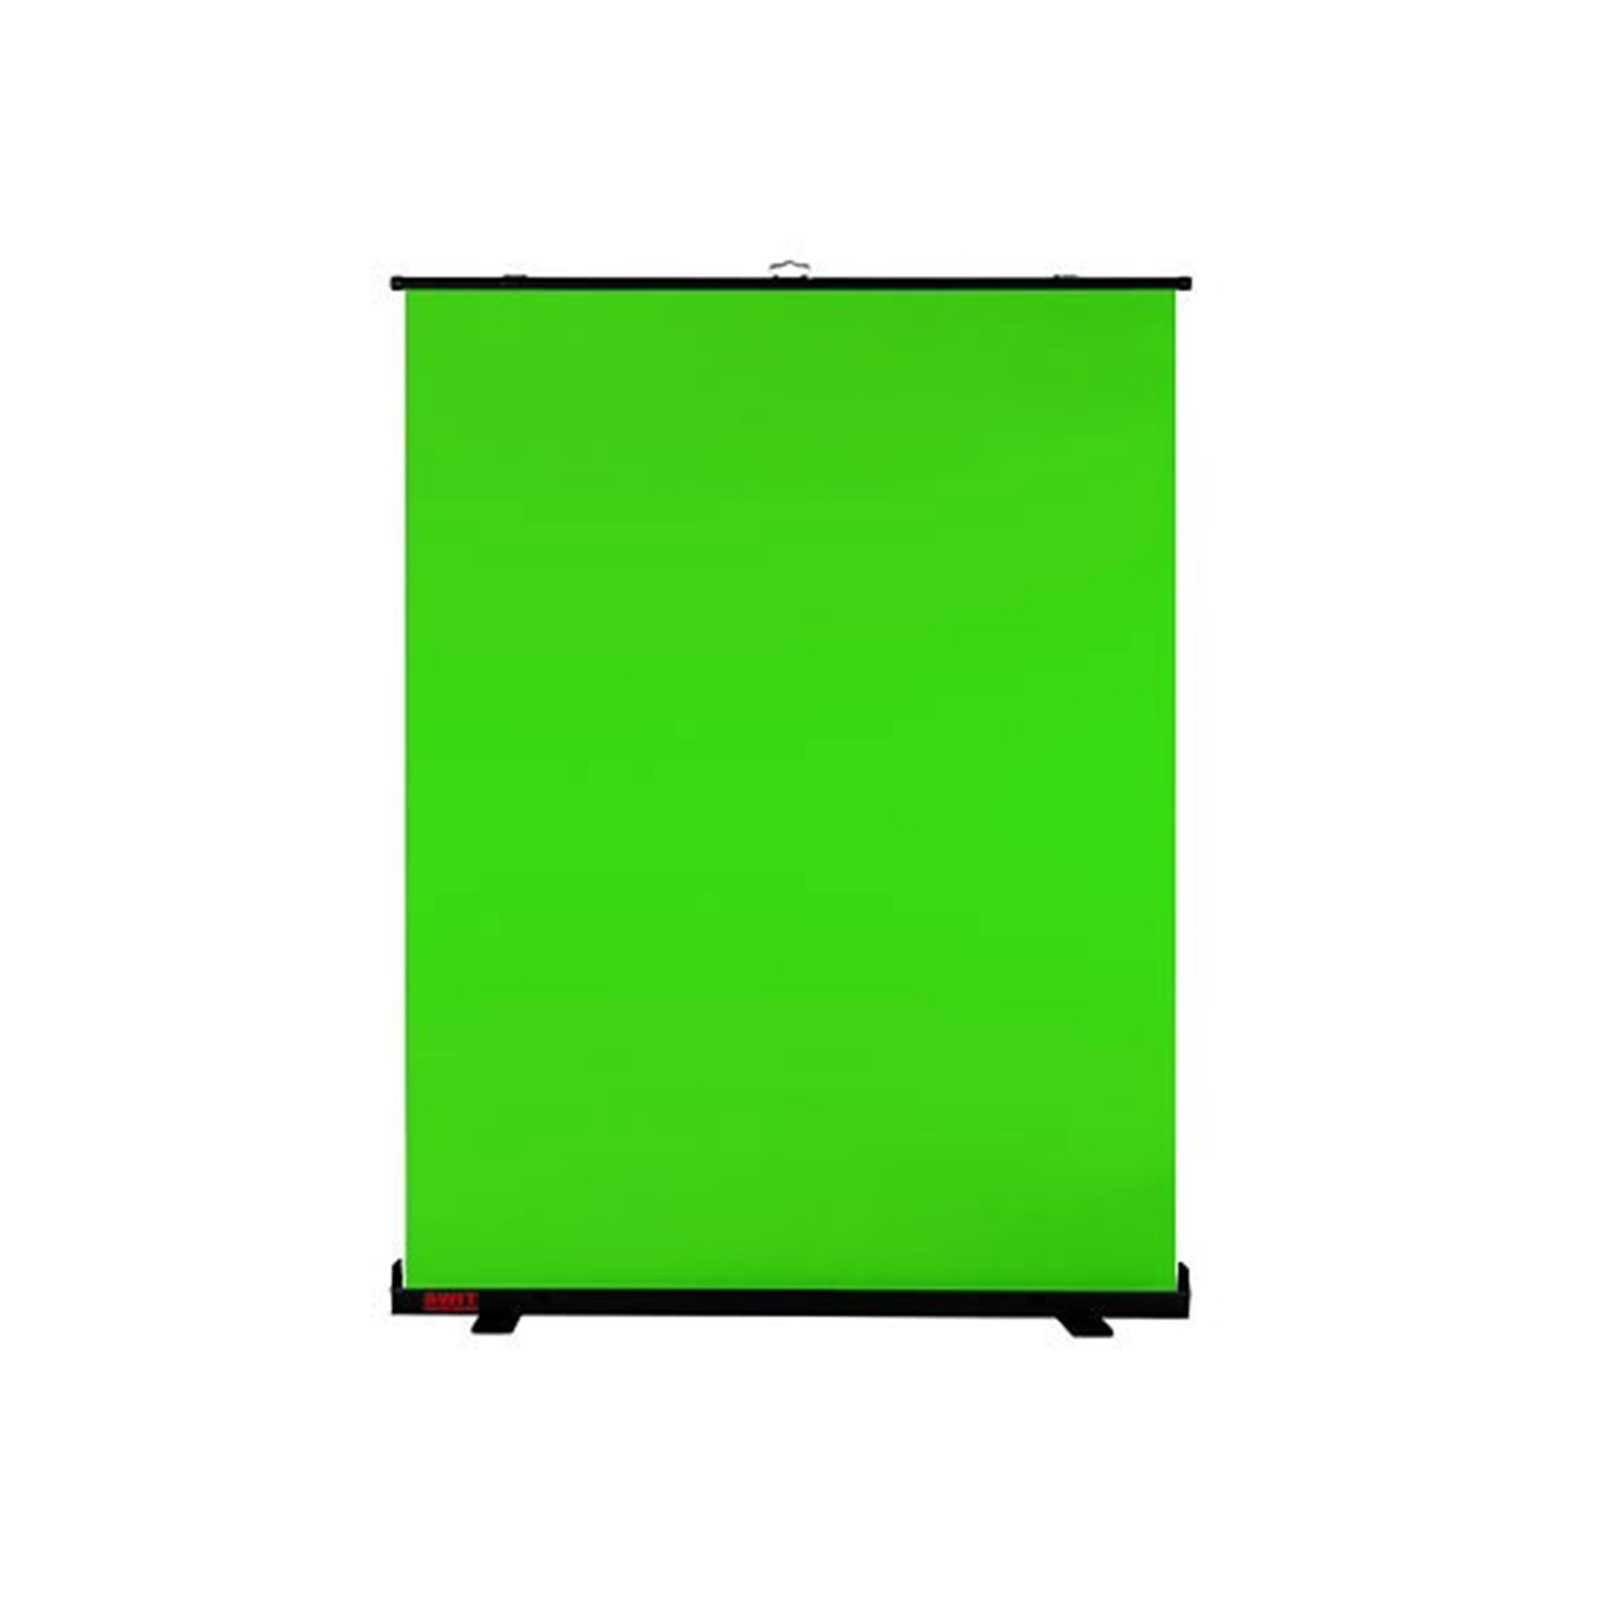 Swit CK-150 x 20 - 1.52m Roll-up Portable Green Screen x 20PCS